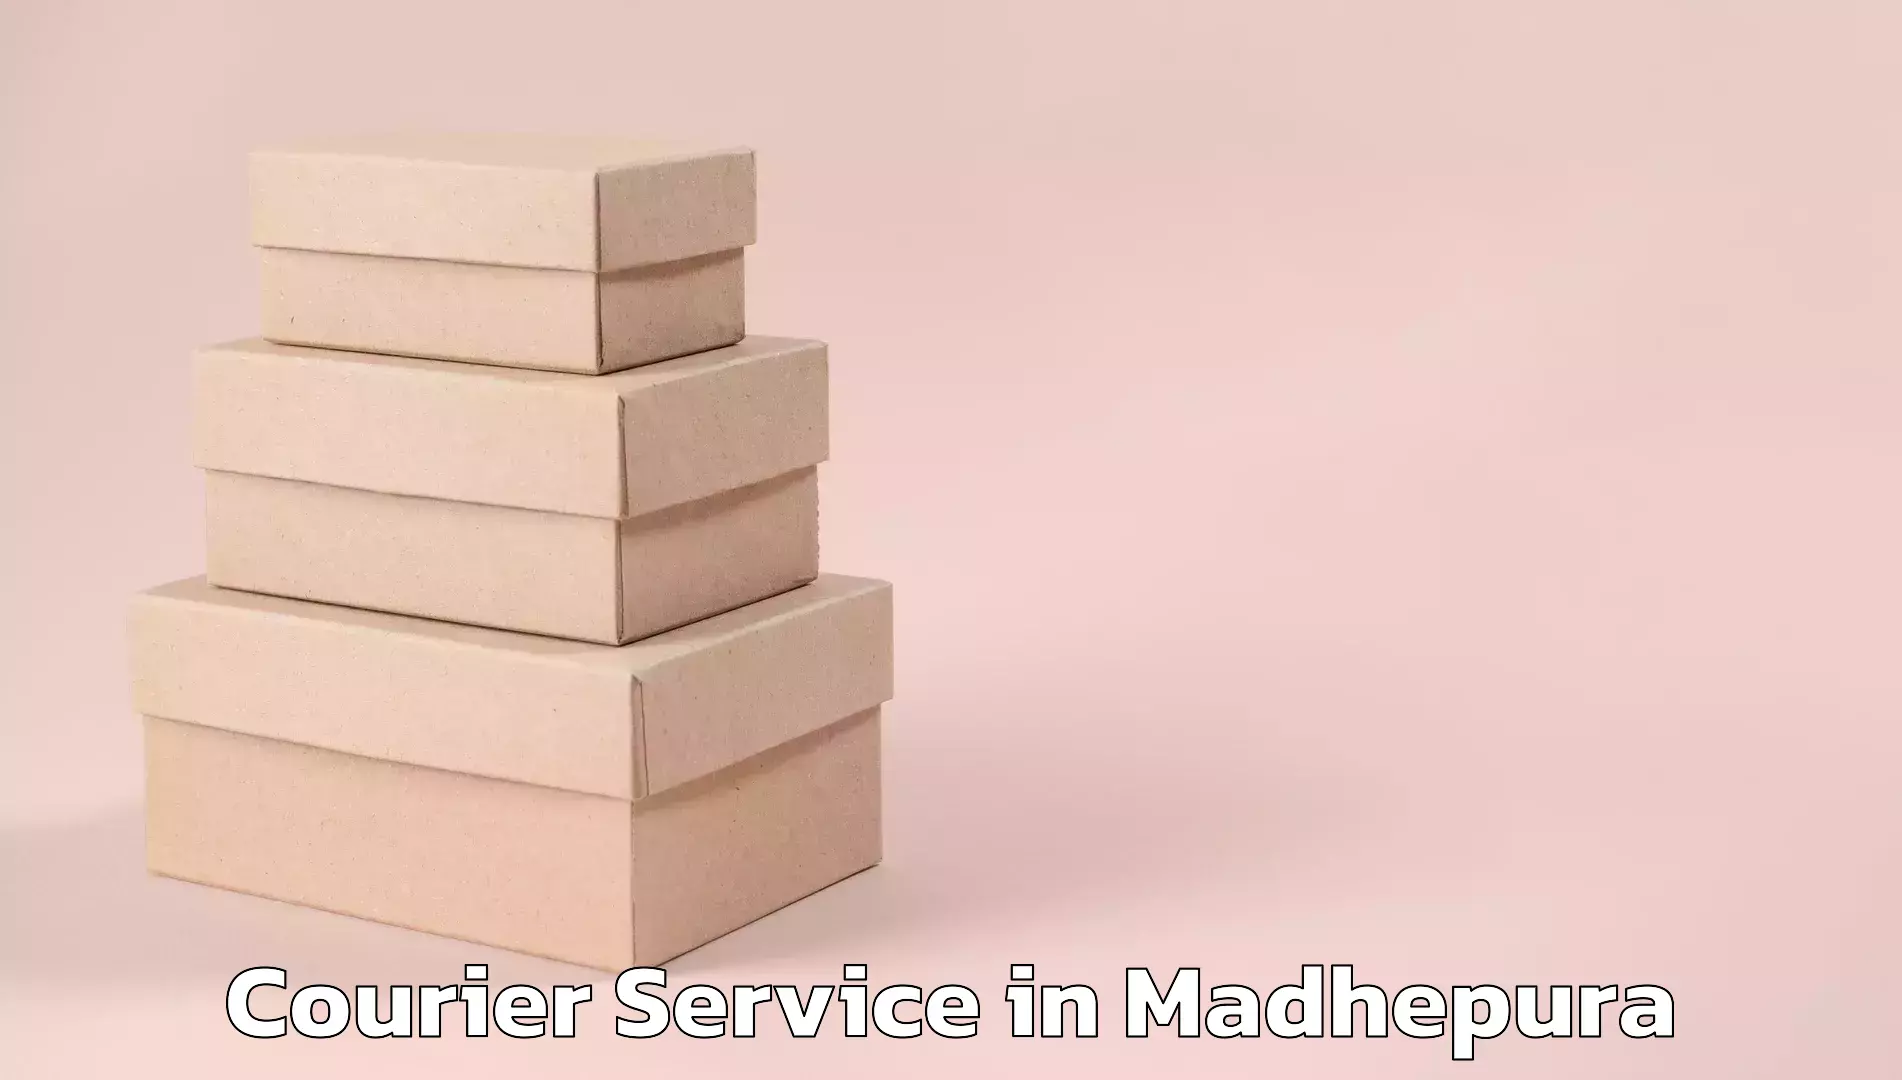 Rapid freight solutions in Madhepura